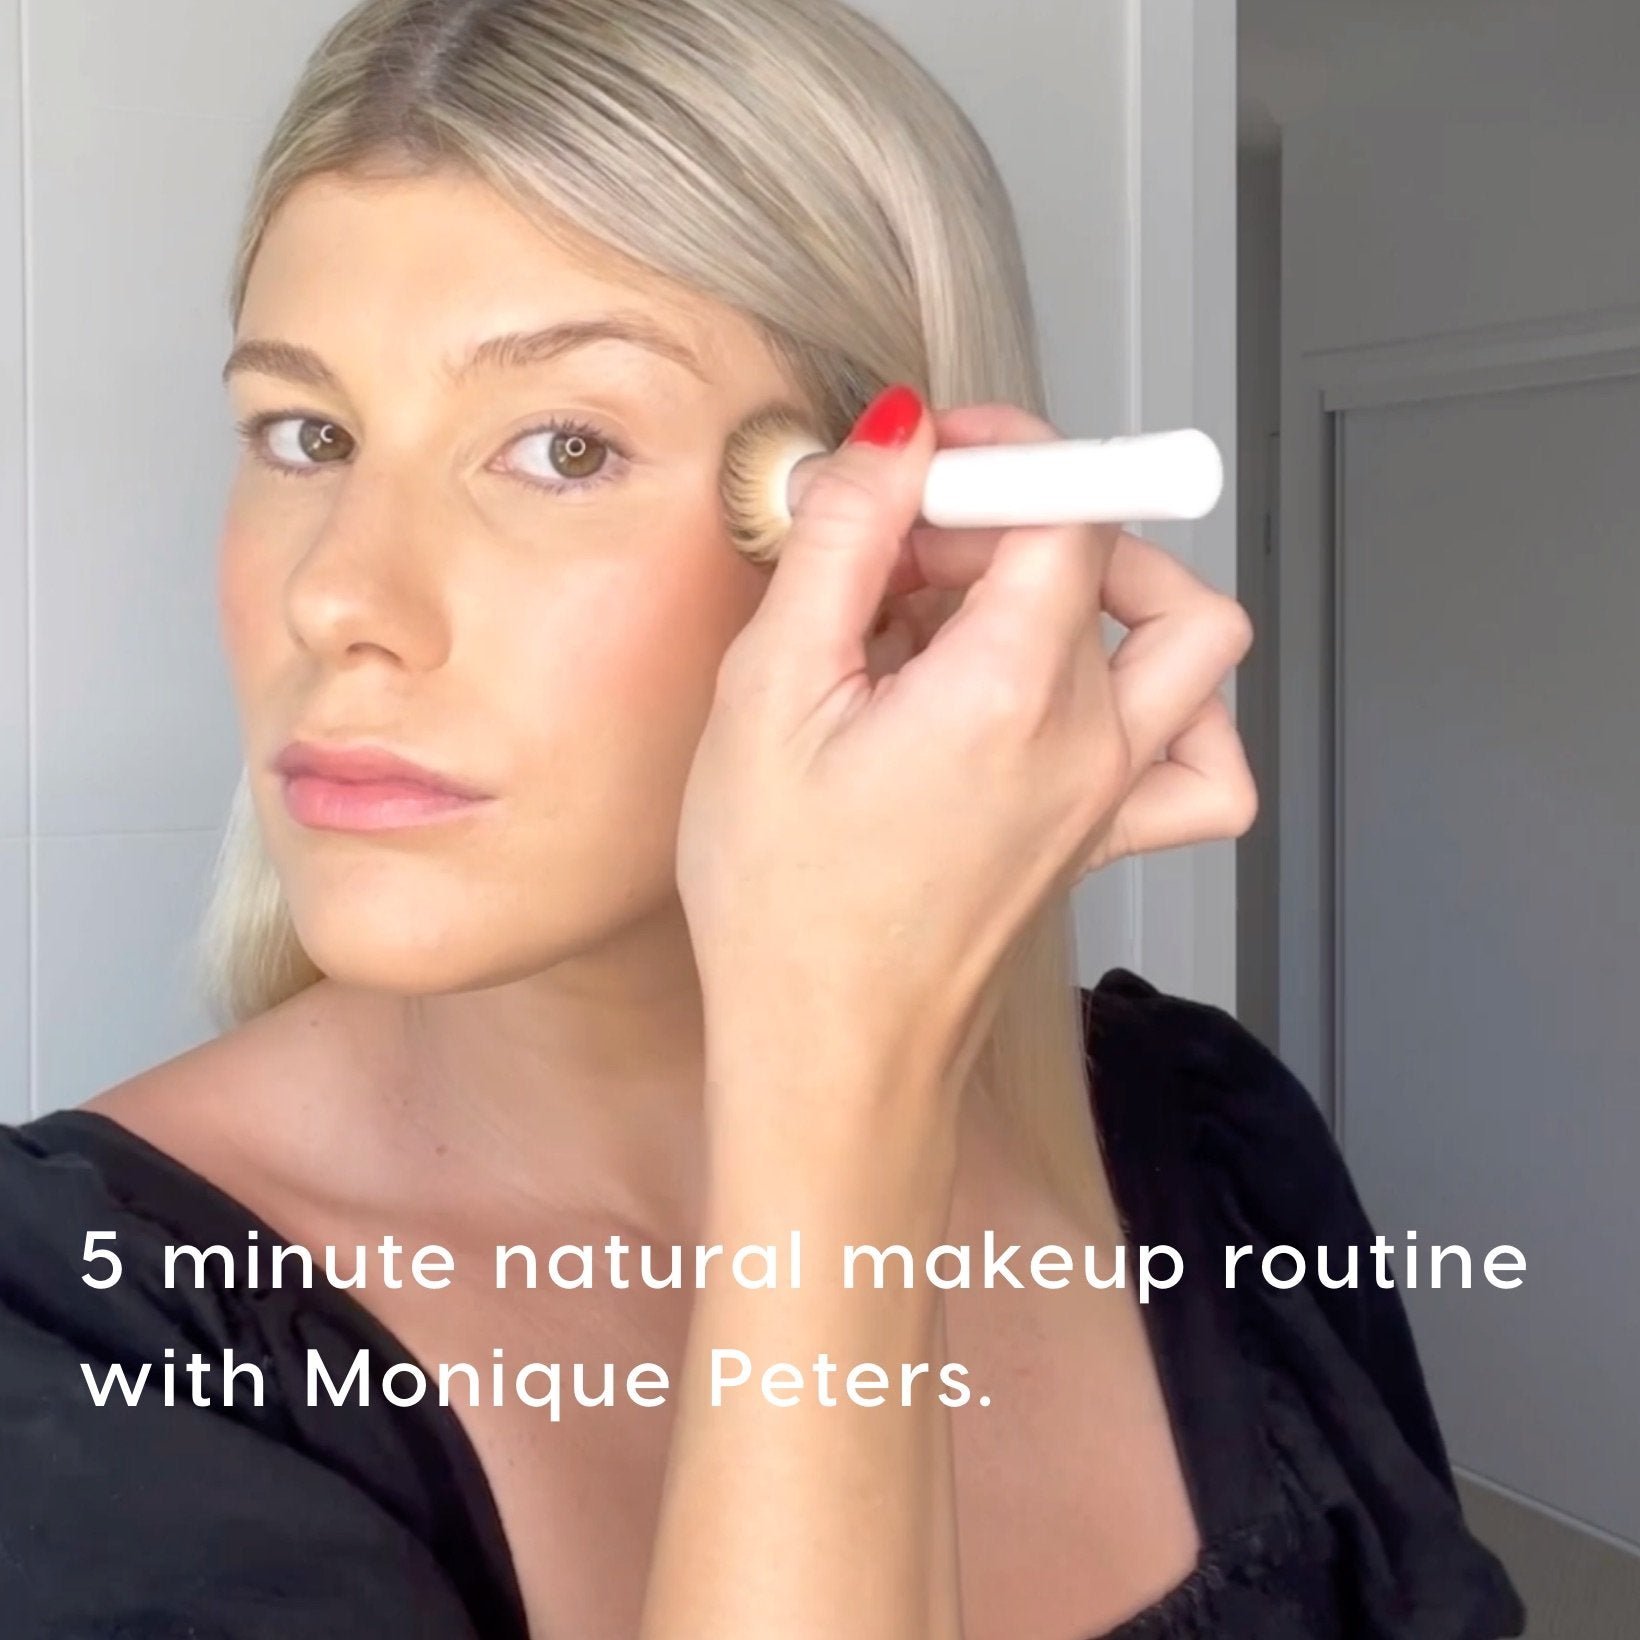 5 minute natural makeup routine